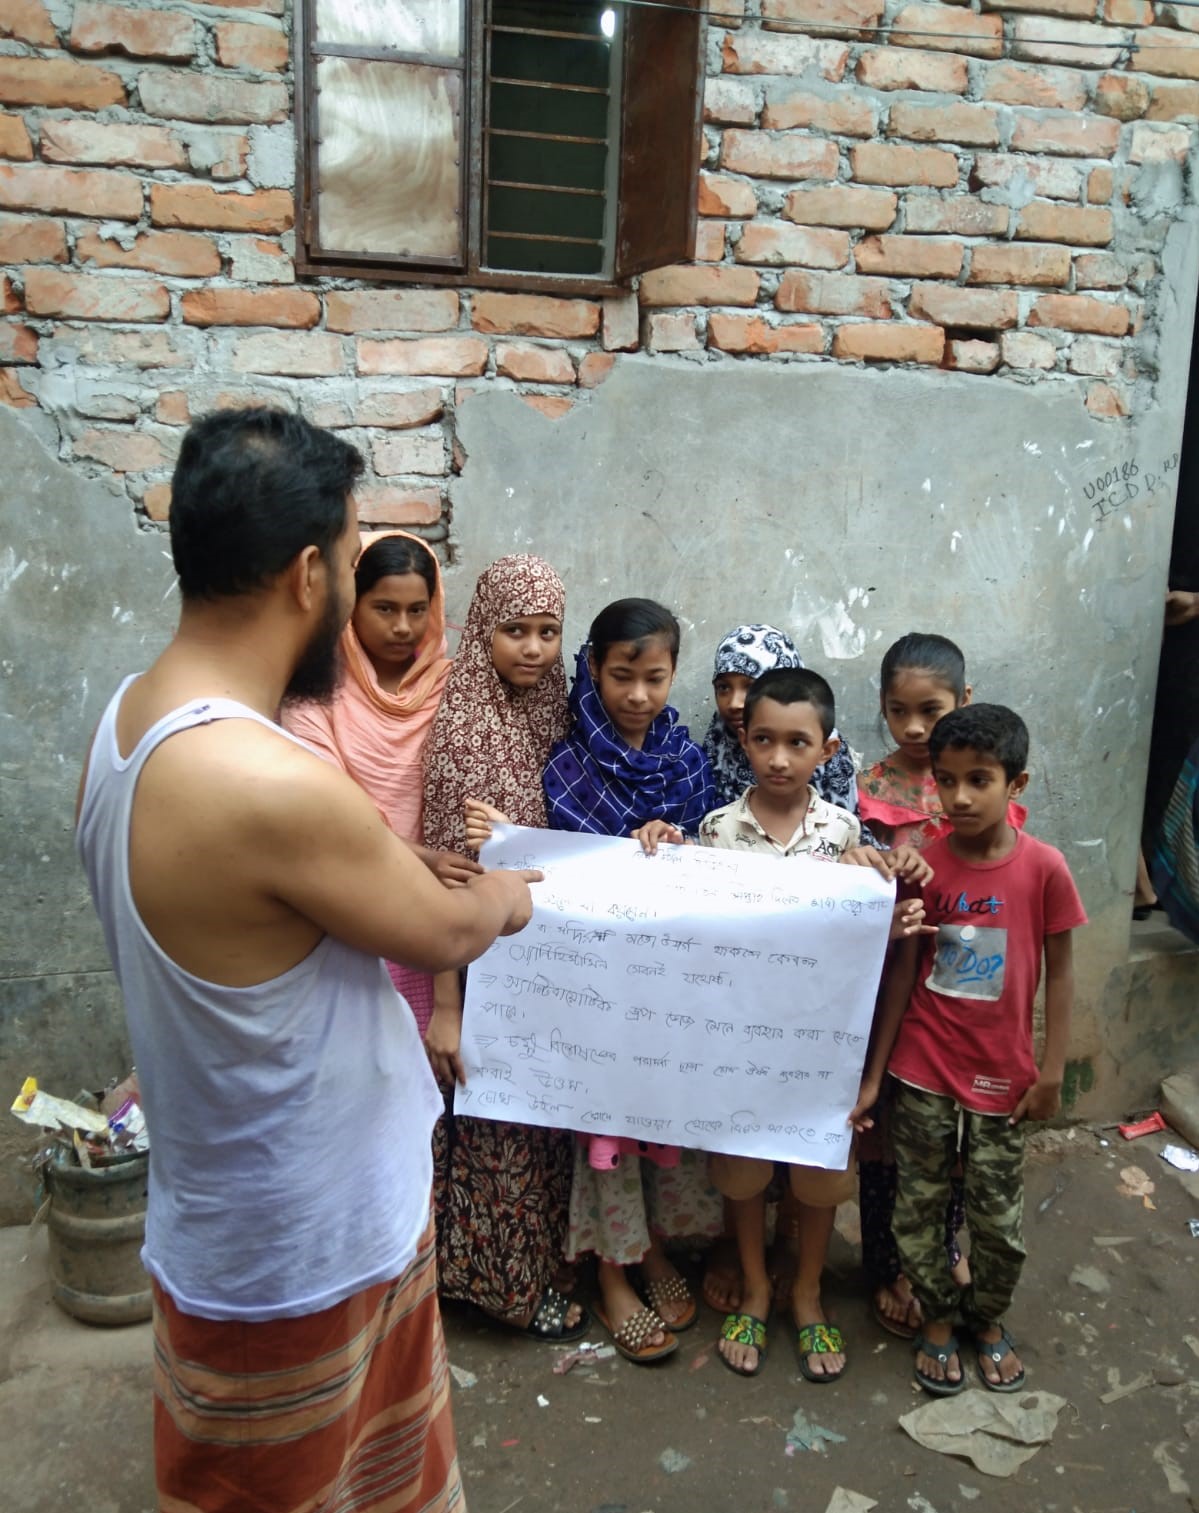 Children in Mohakhali spreading conjunctivitis awareness